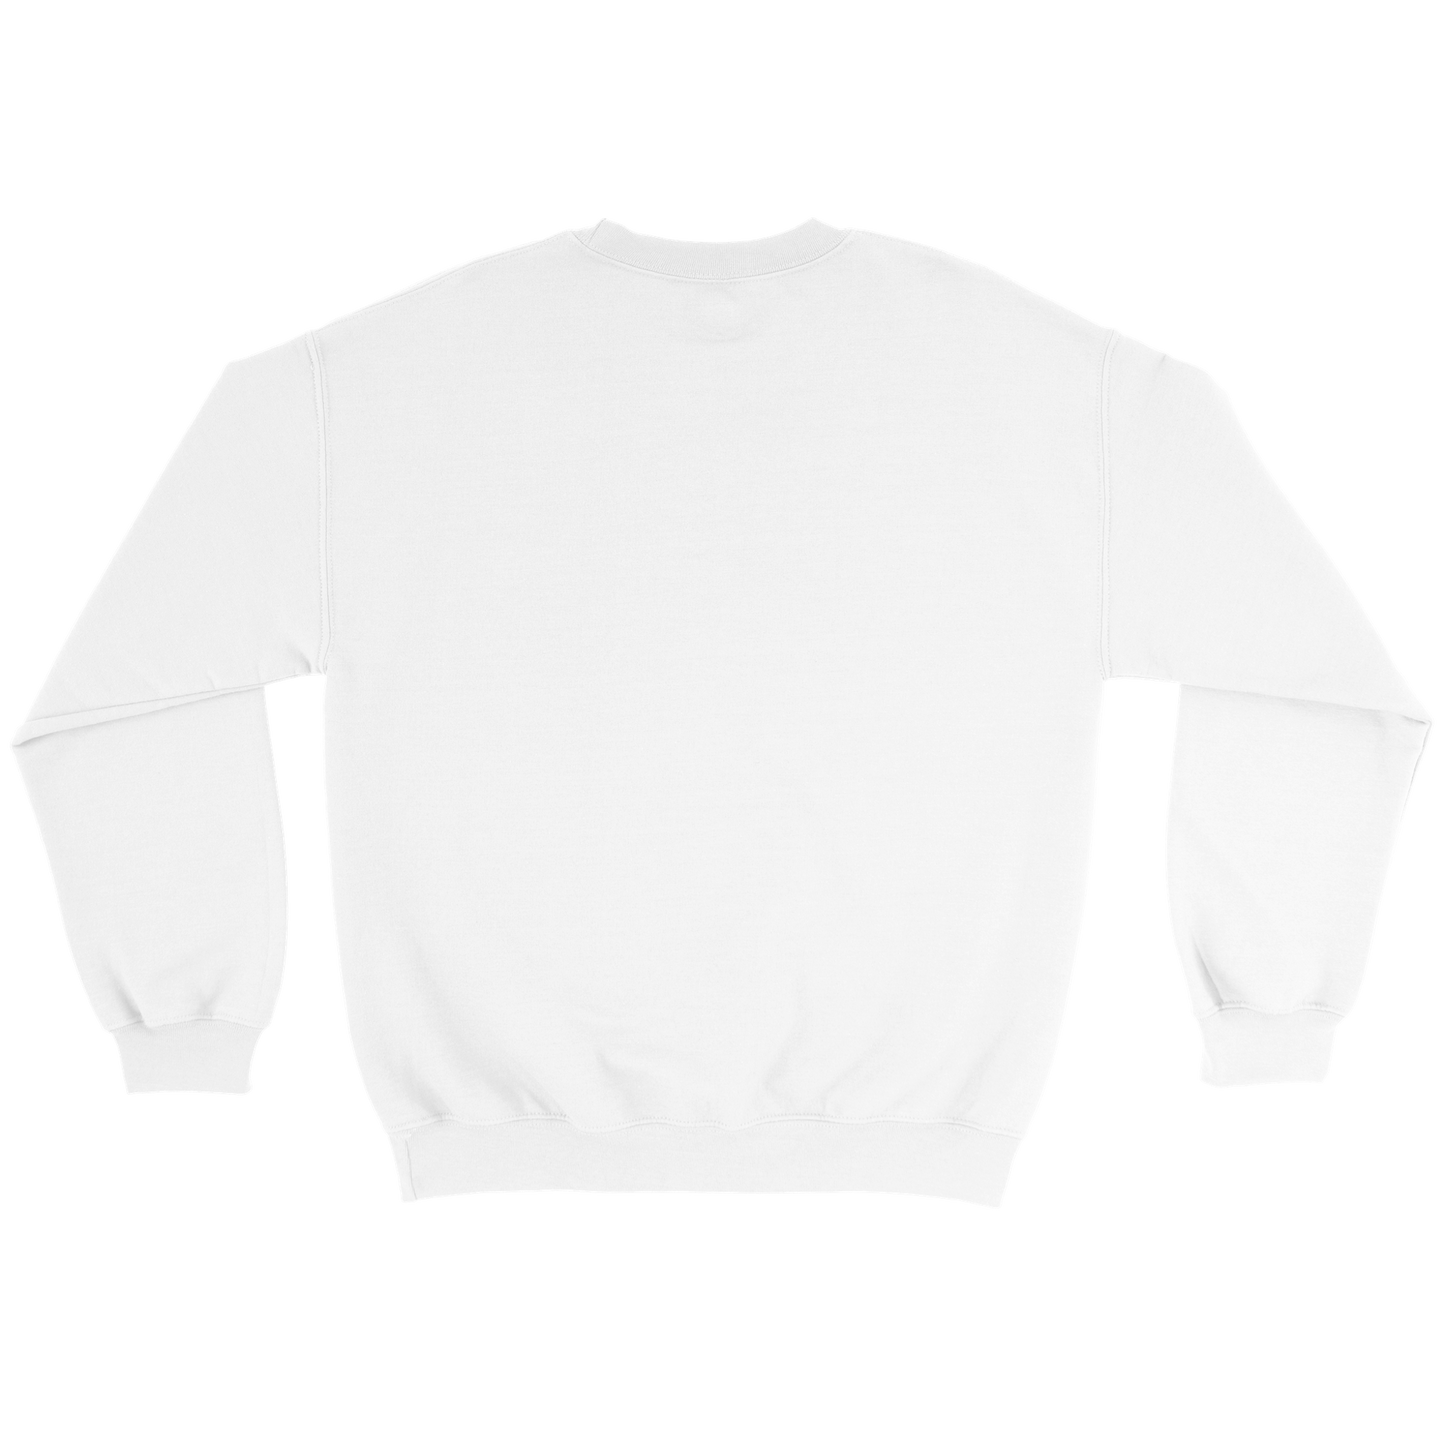 Arizona custom text Classic Unisex Crewneck Sweatshirt